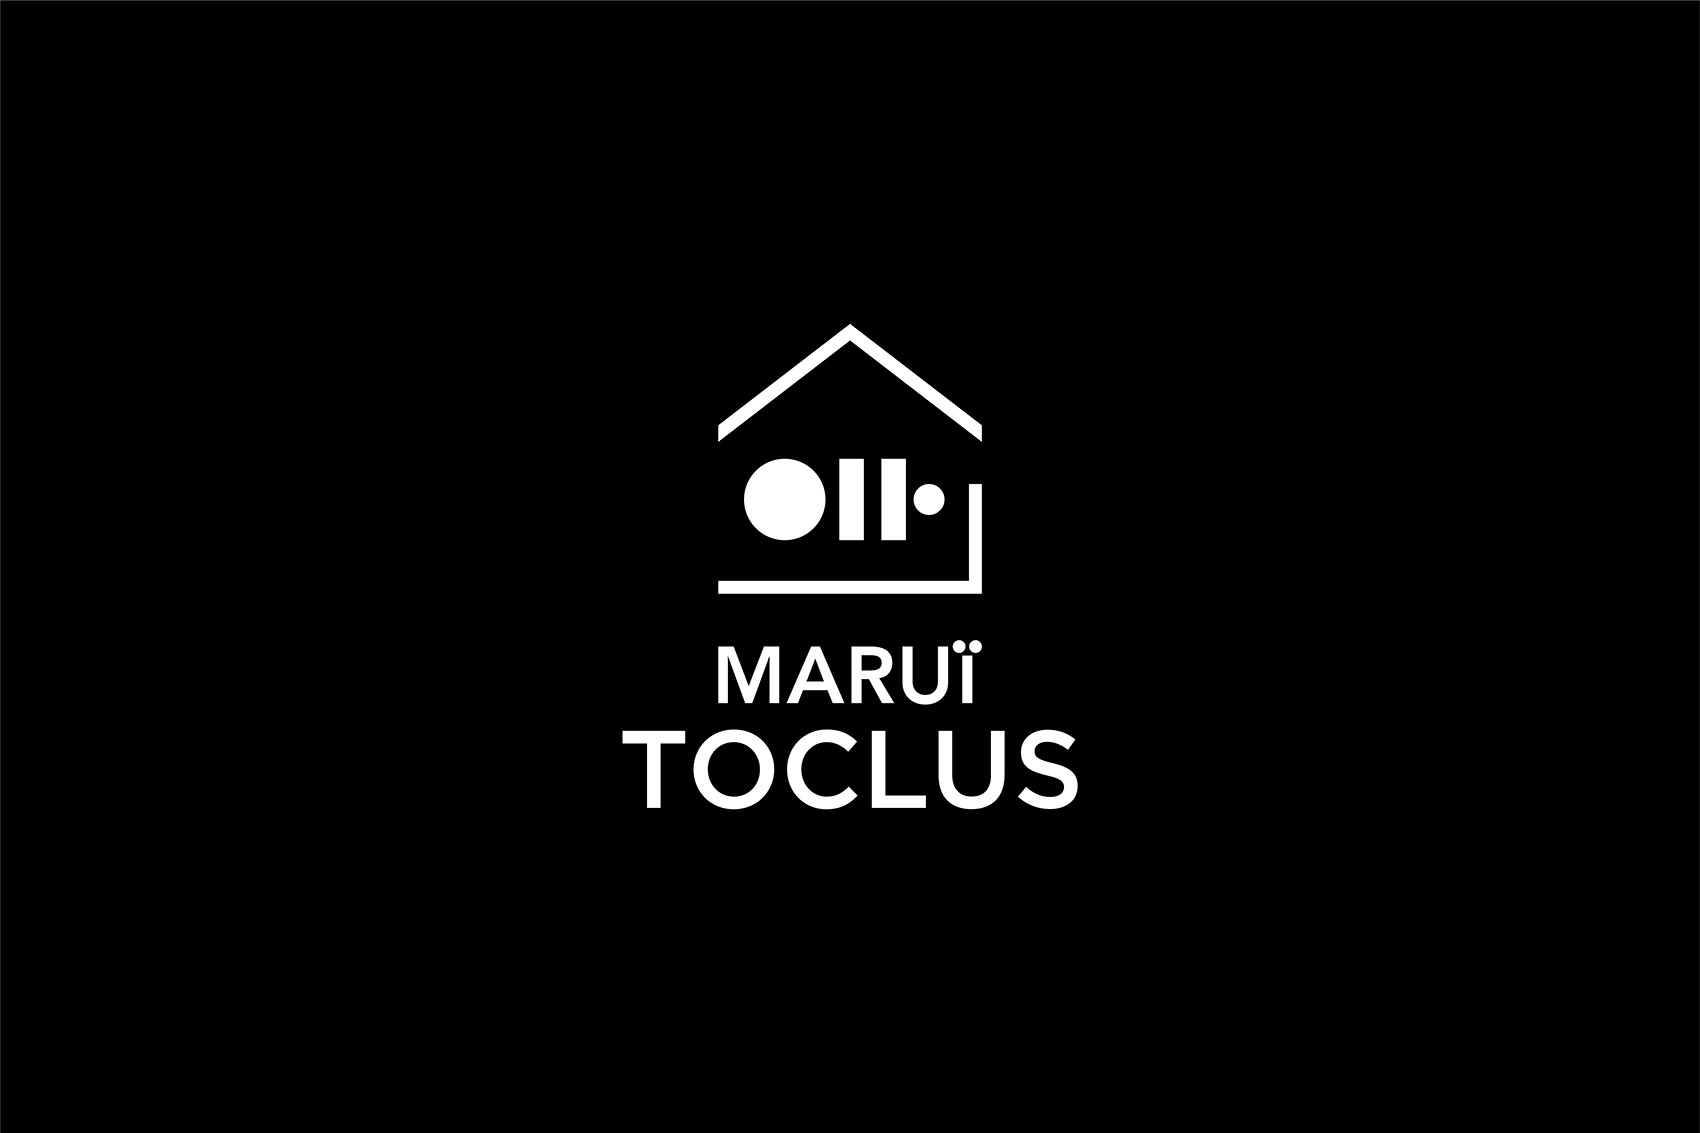 MARUI TOCLUS综合共享住宅，东京/将商业空间转化成展示新生活方式和社区文化的场所-77